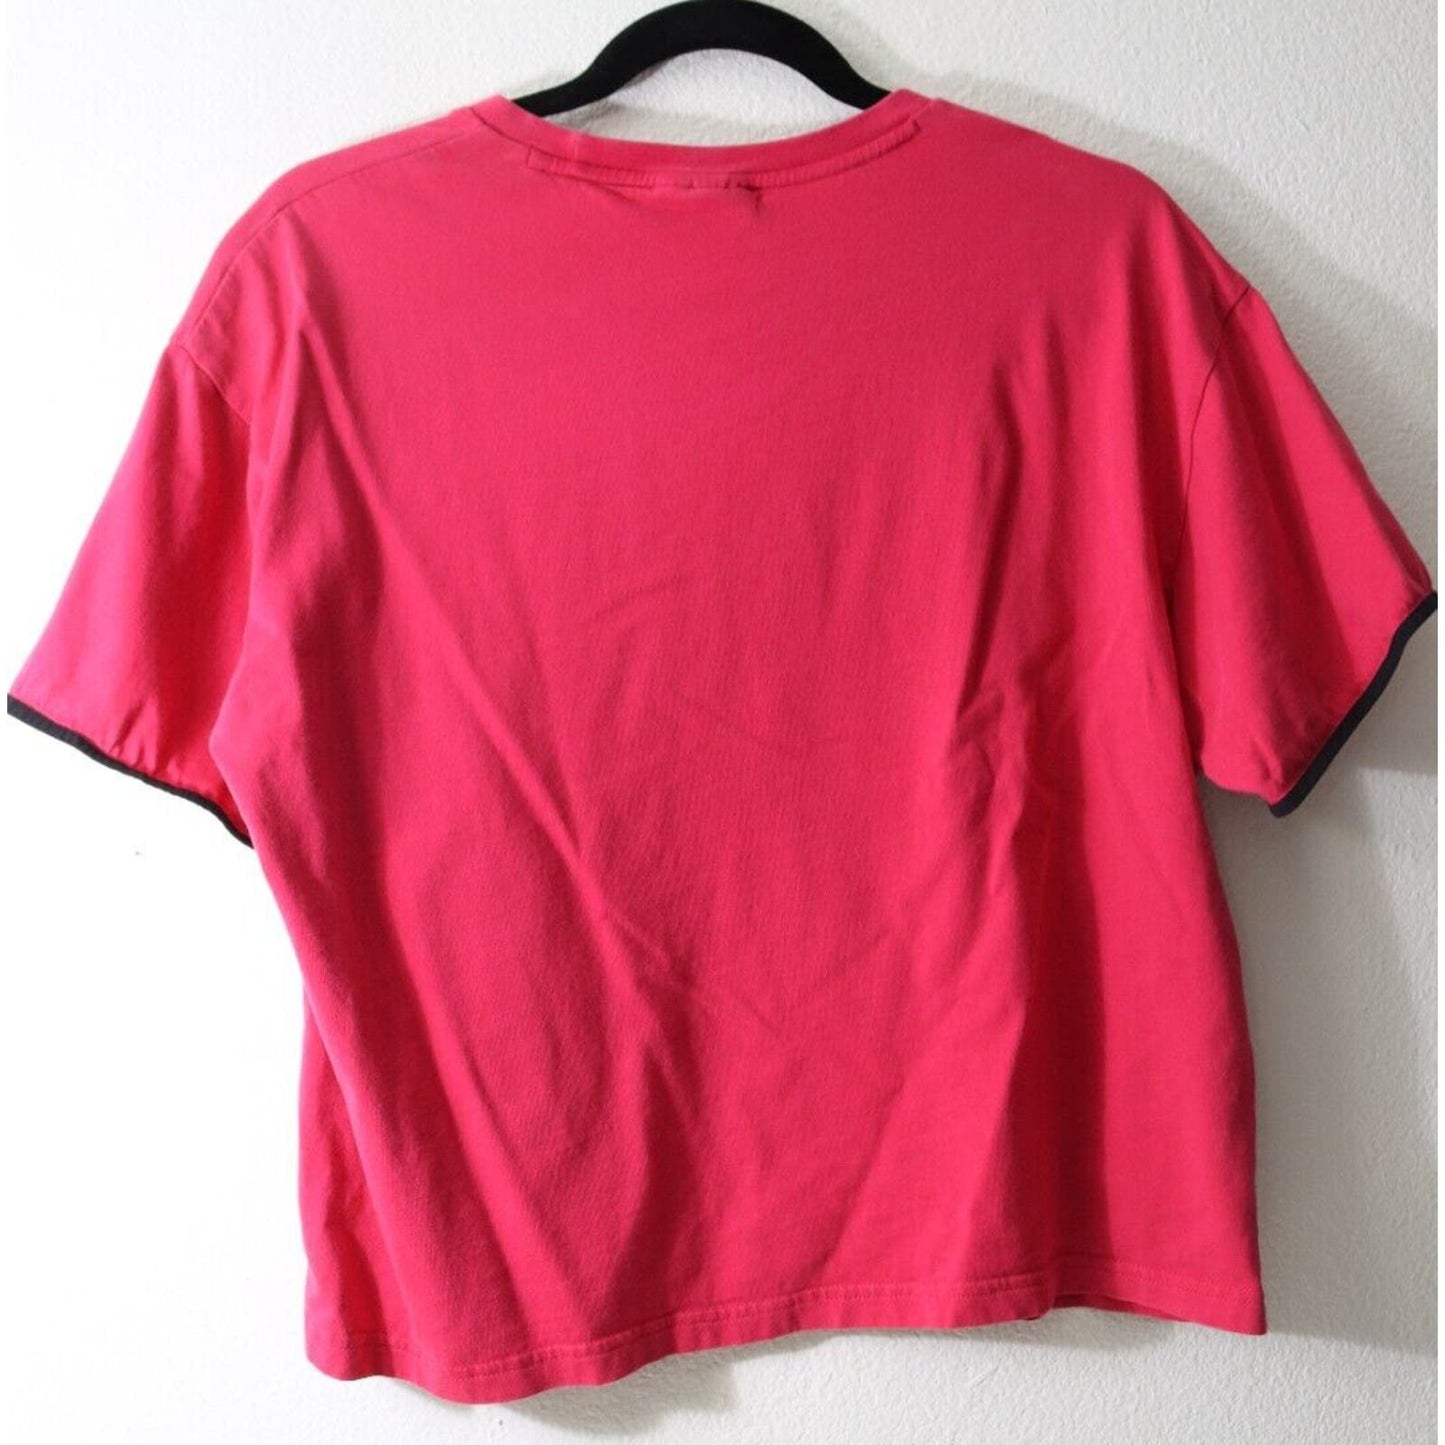 Puma Pink Short Sleeve Top Activewear Size Medium